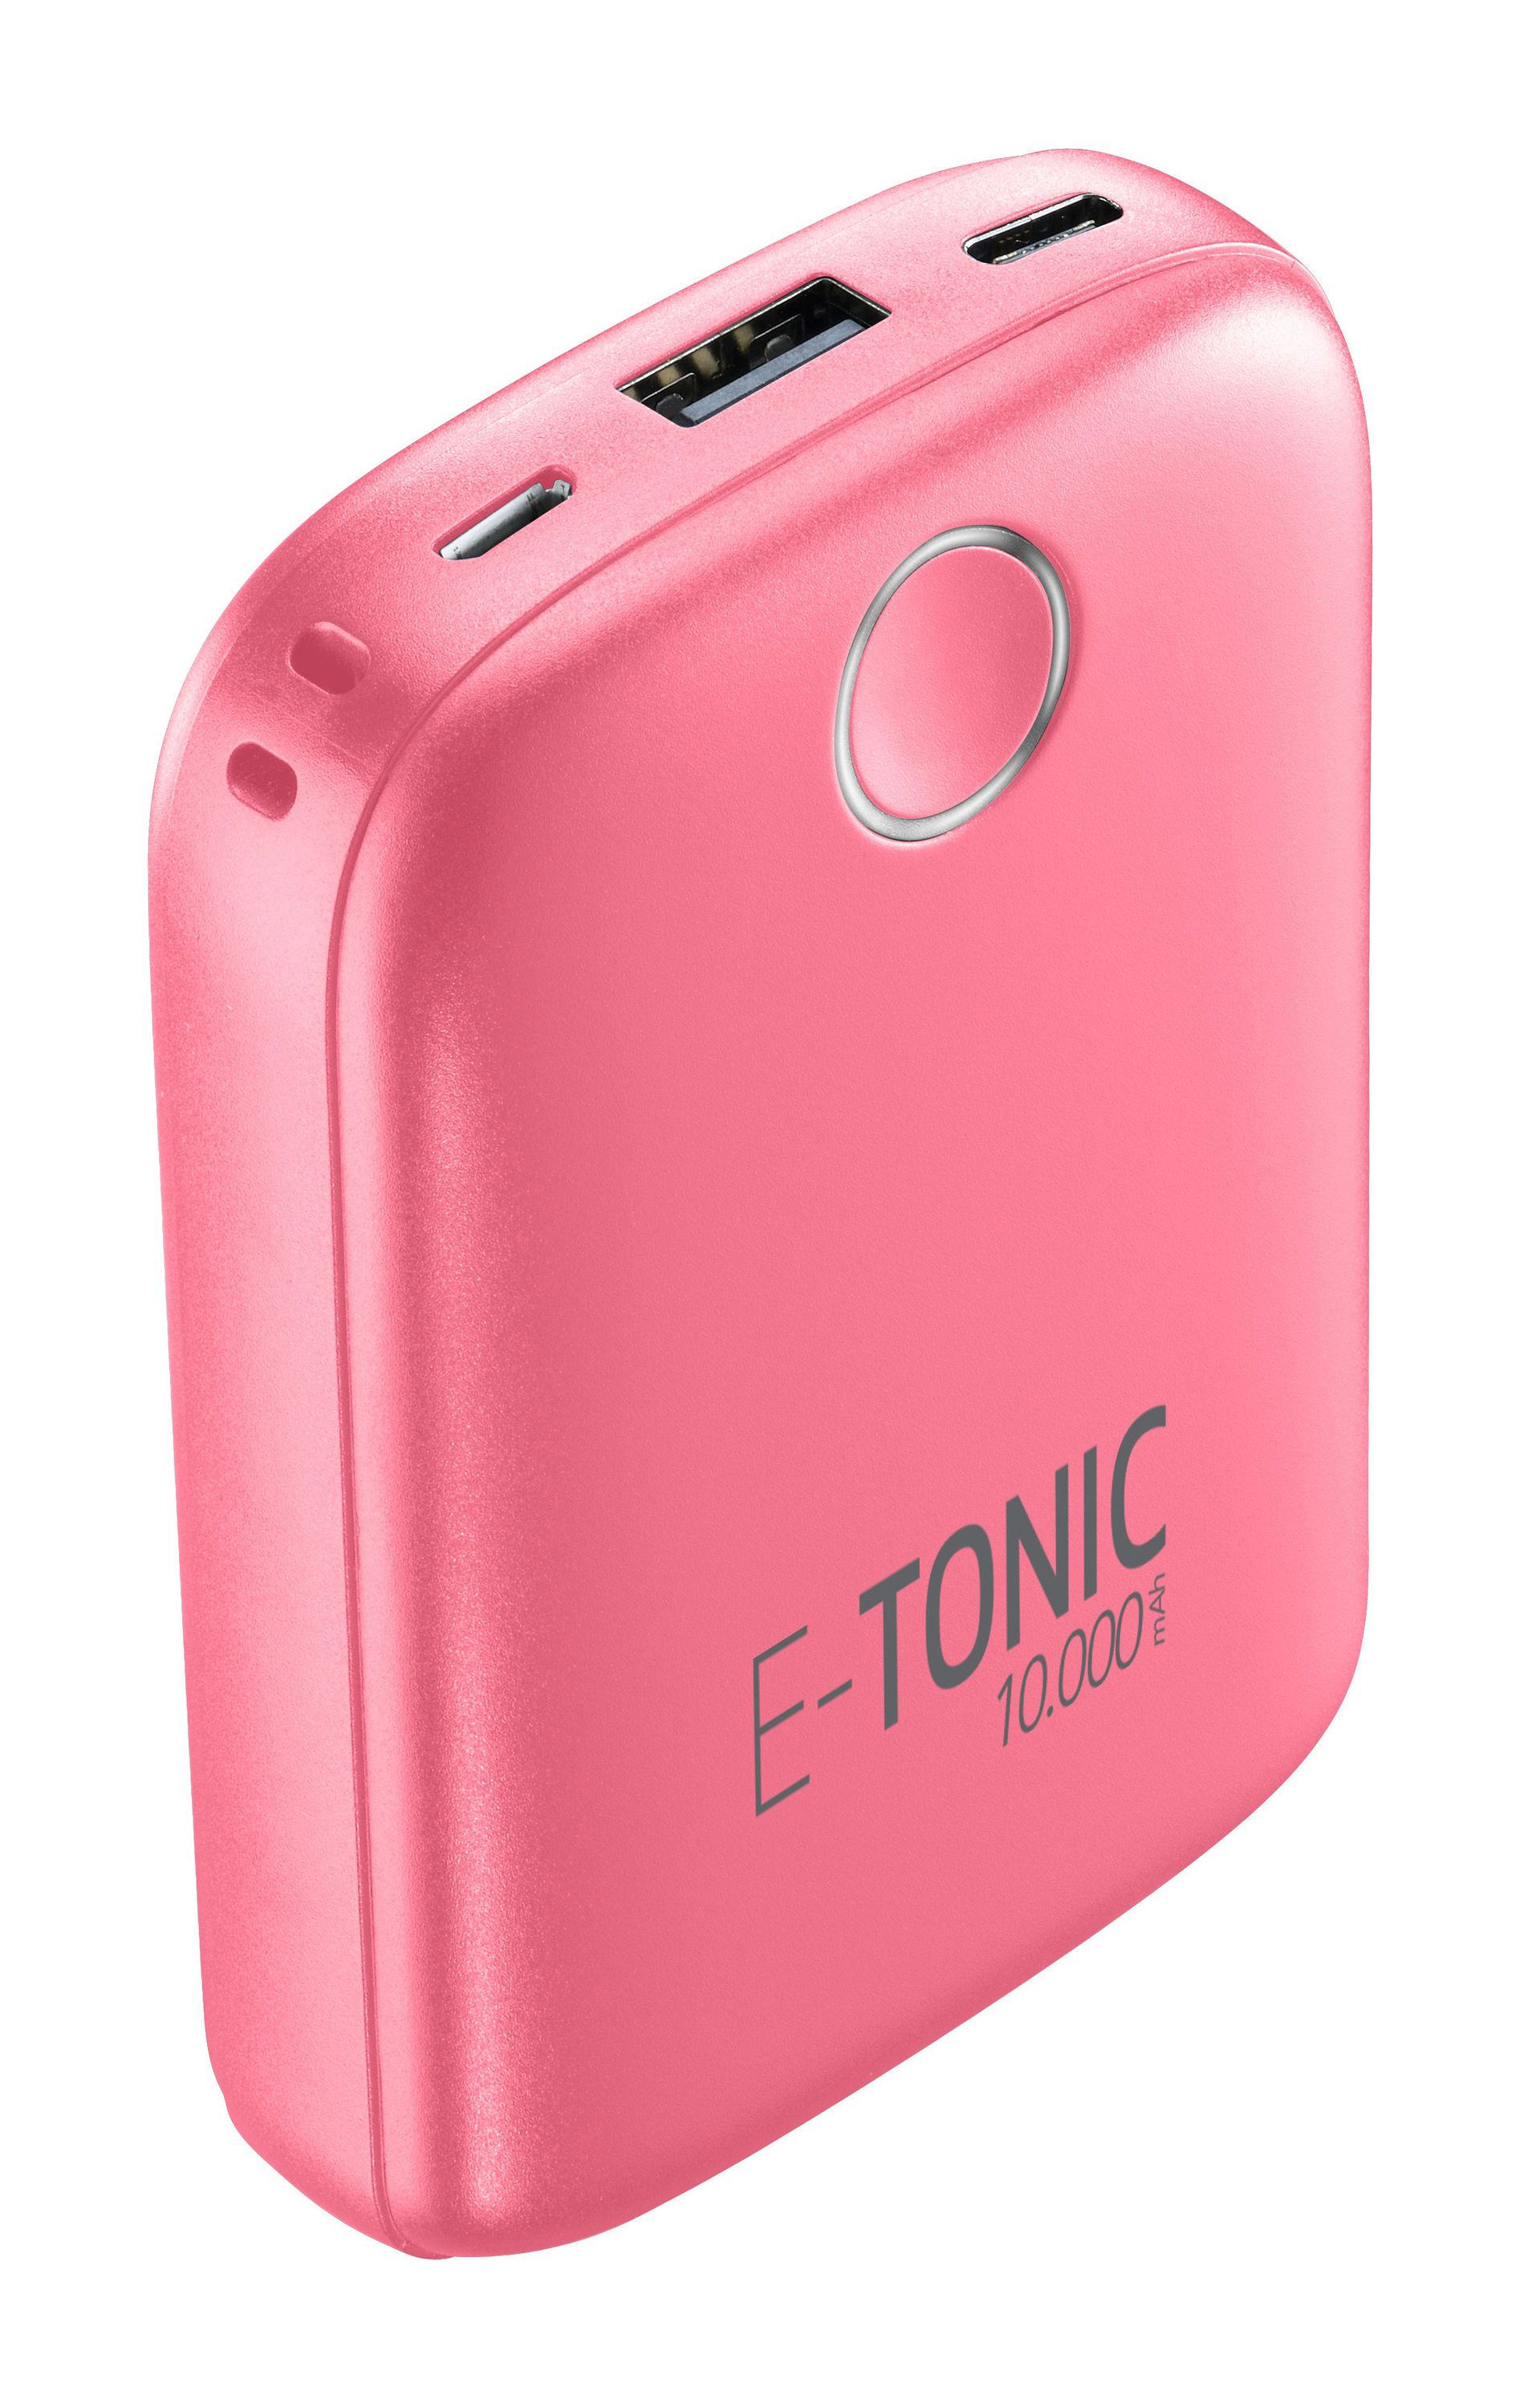 LINE Pink 10000 CELLULAR E-Tonic mAh Powerbank